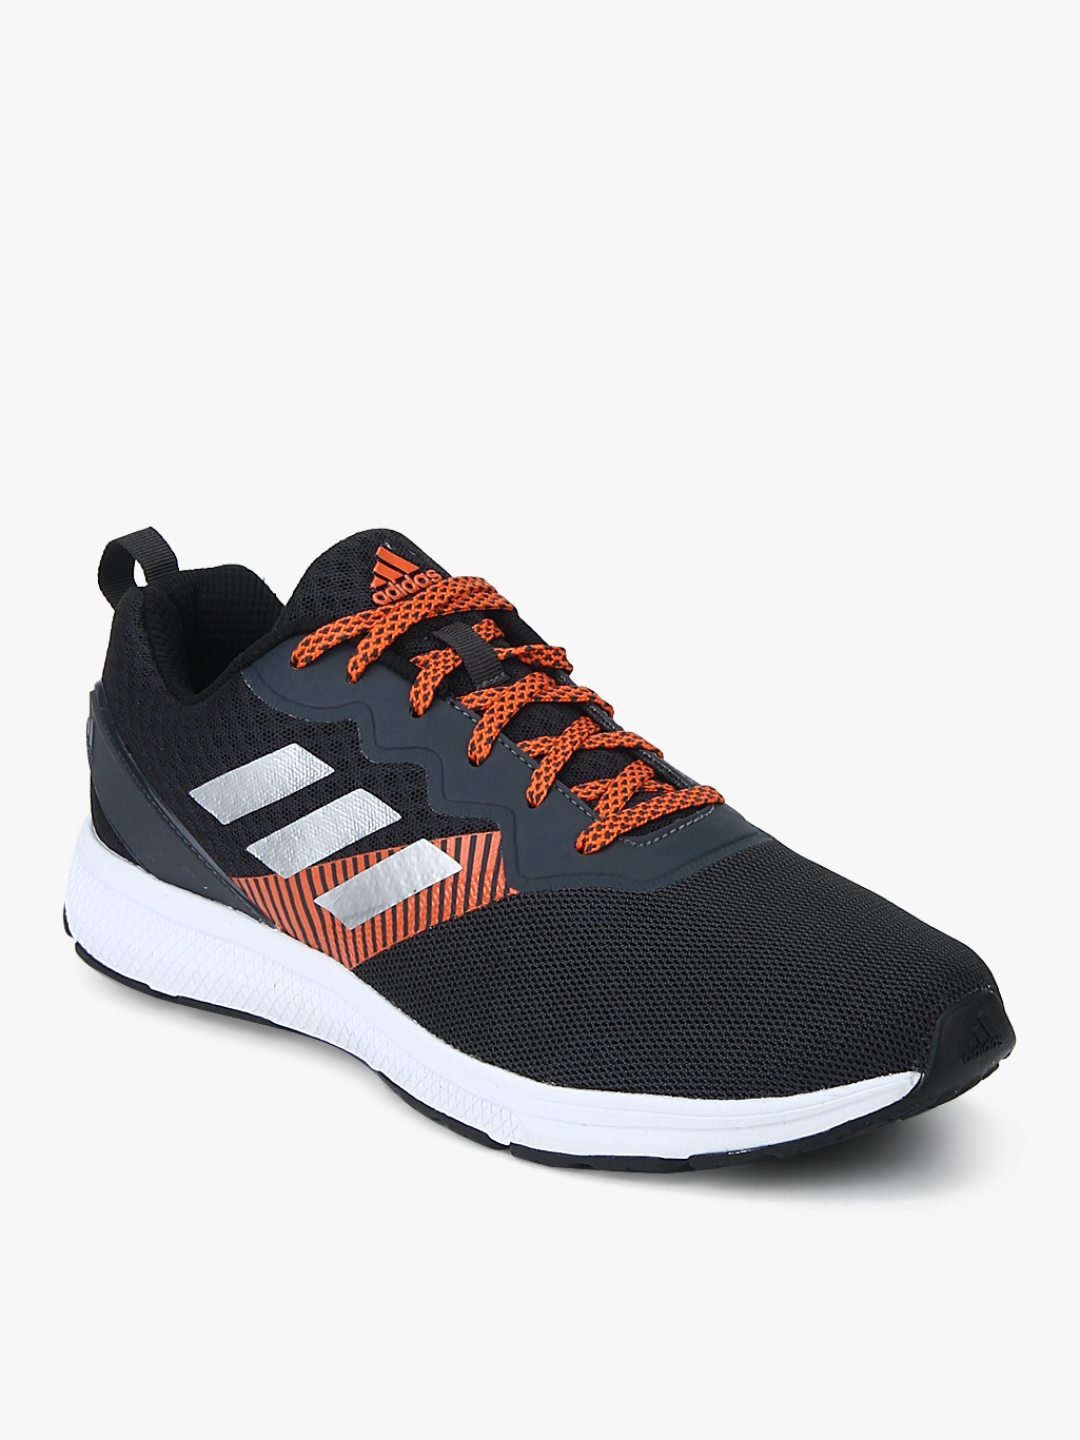 Buy Kyris Dark Grey Running Shoes - Sports Shoes for Men 7636033 | Myntra